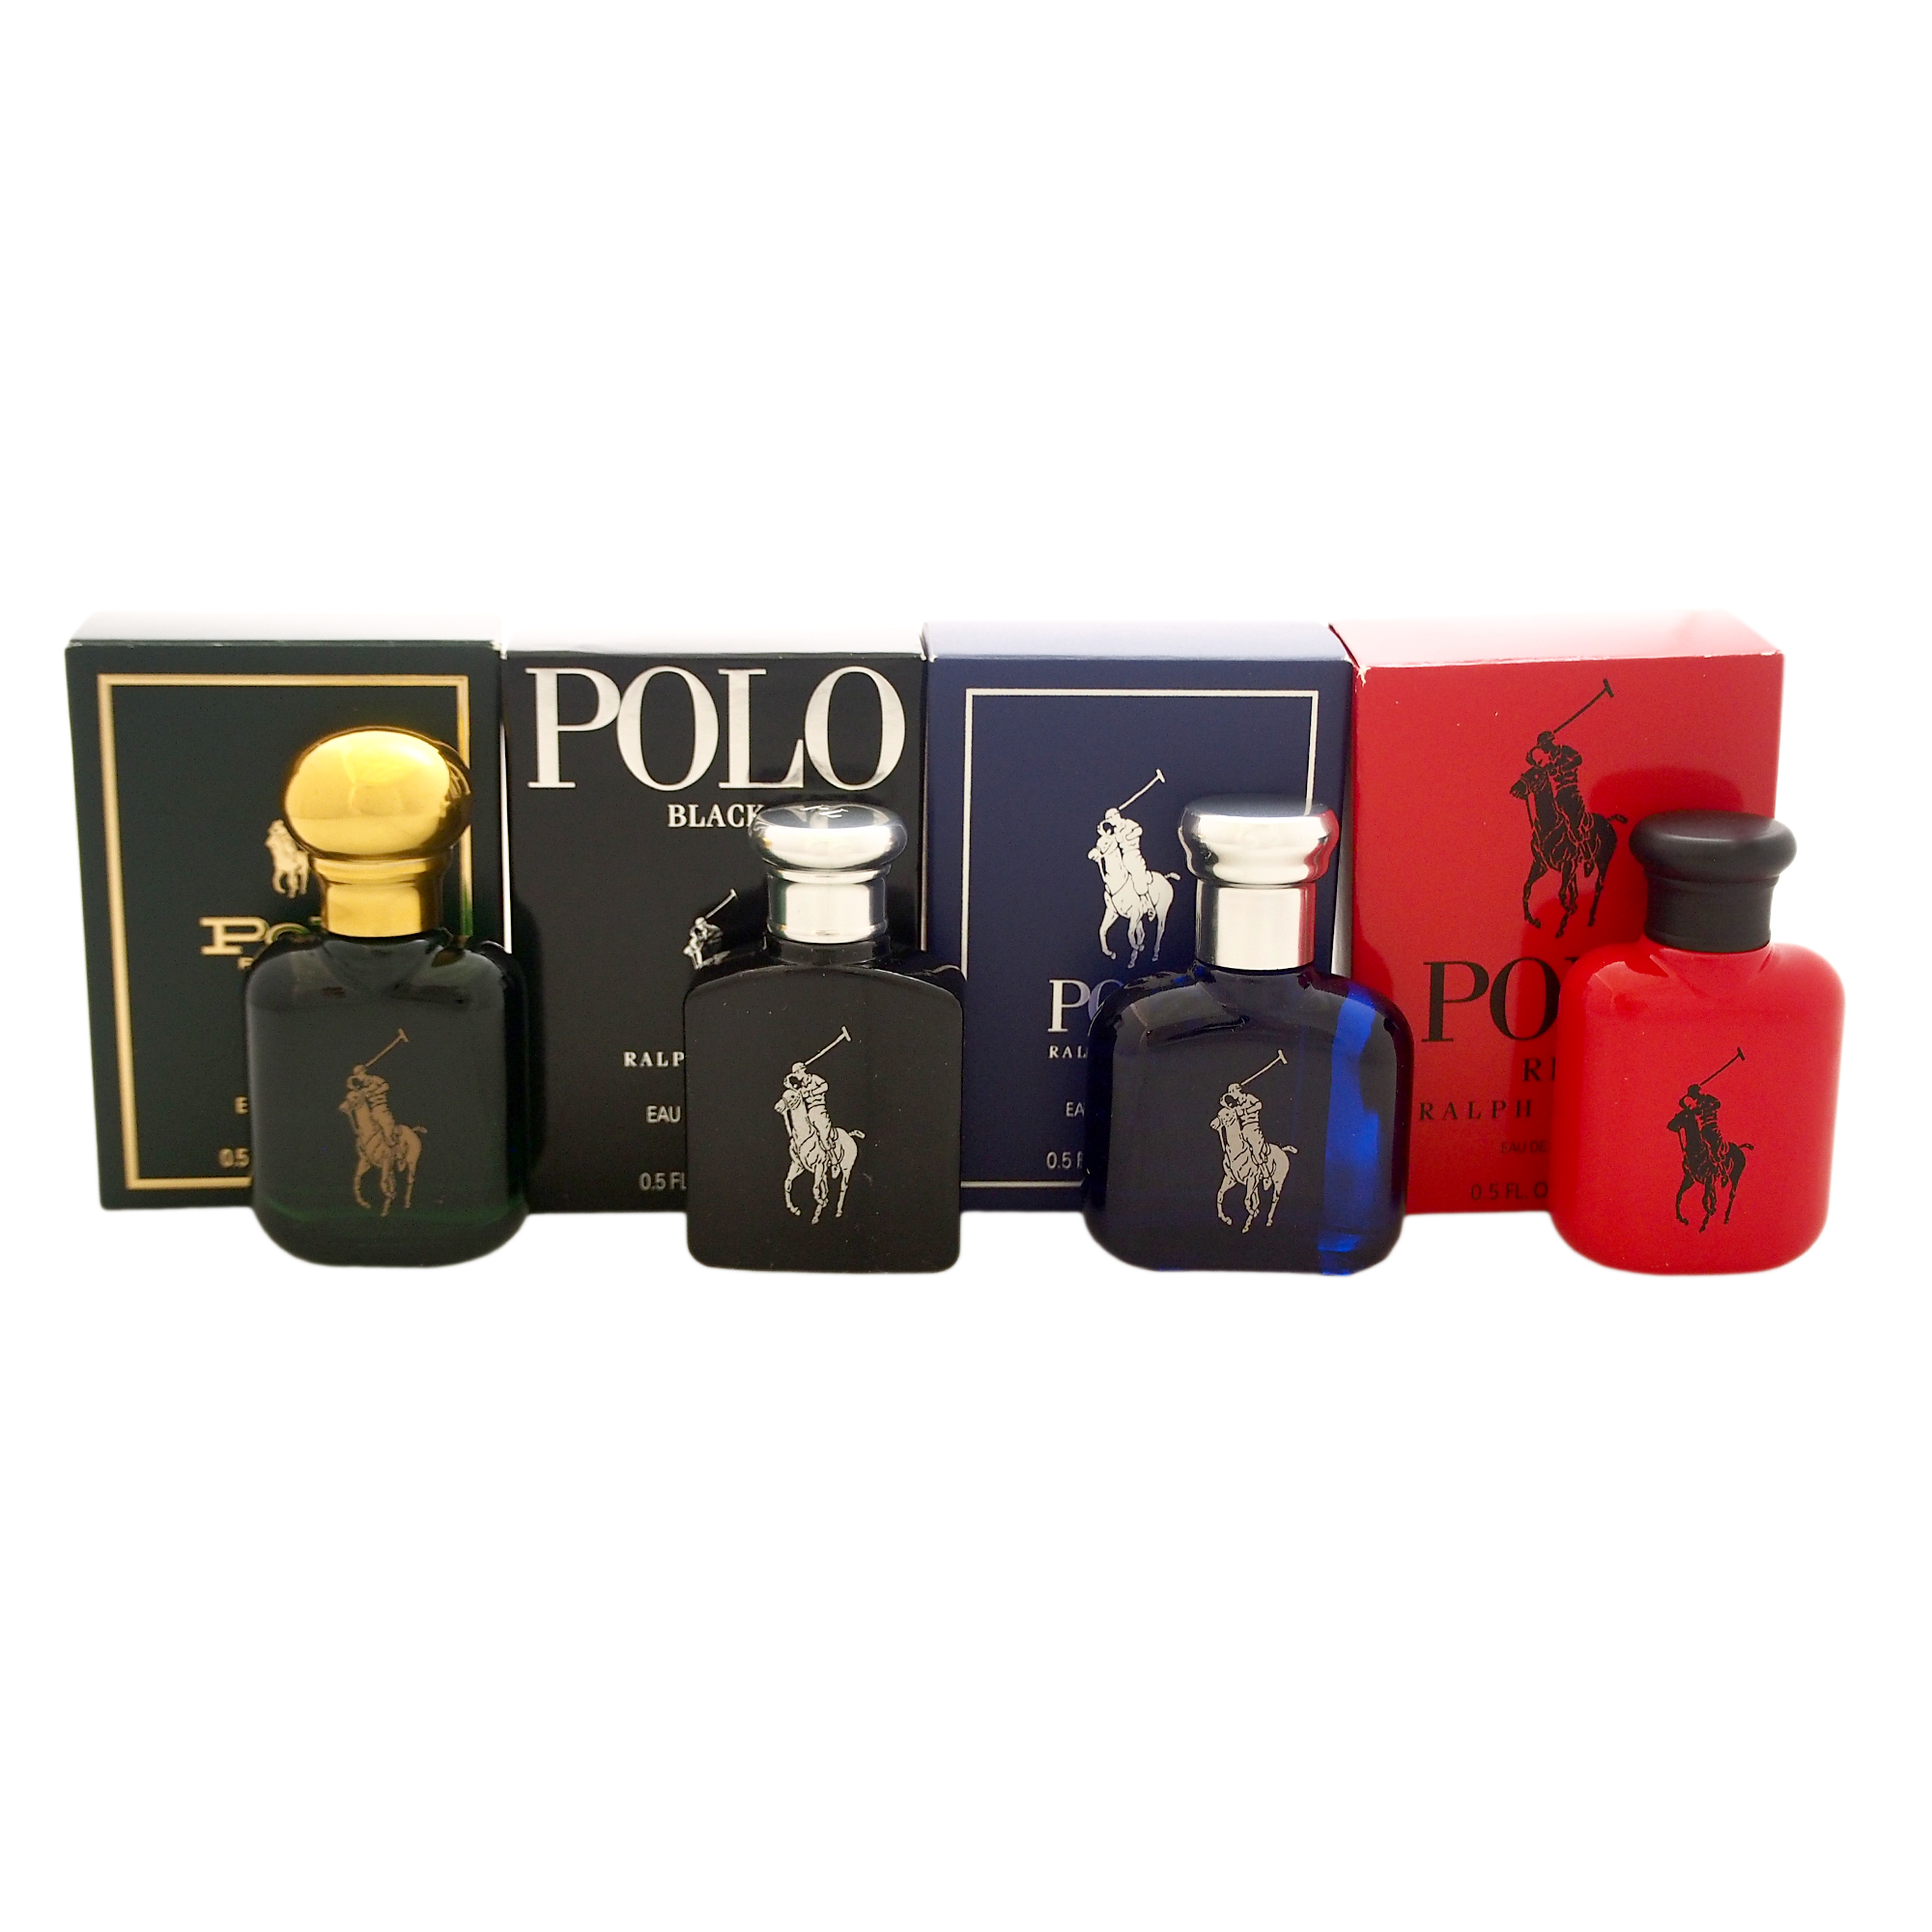 ralph lauren miniature perfume set